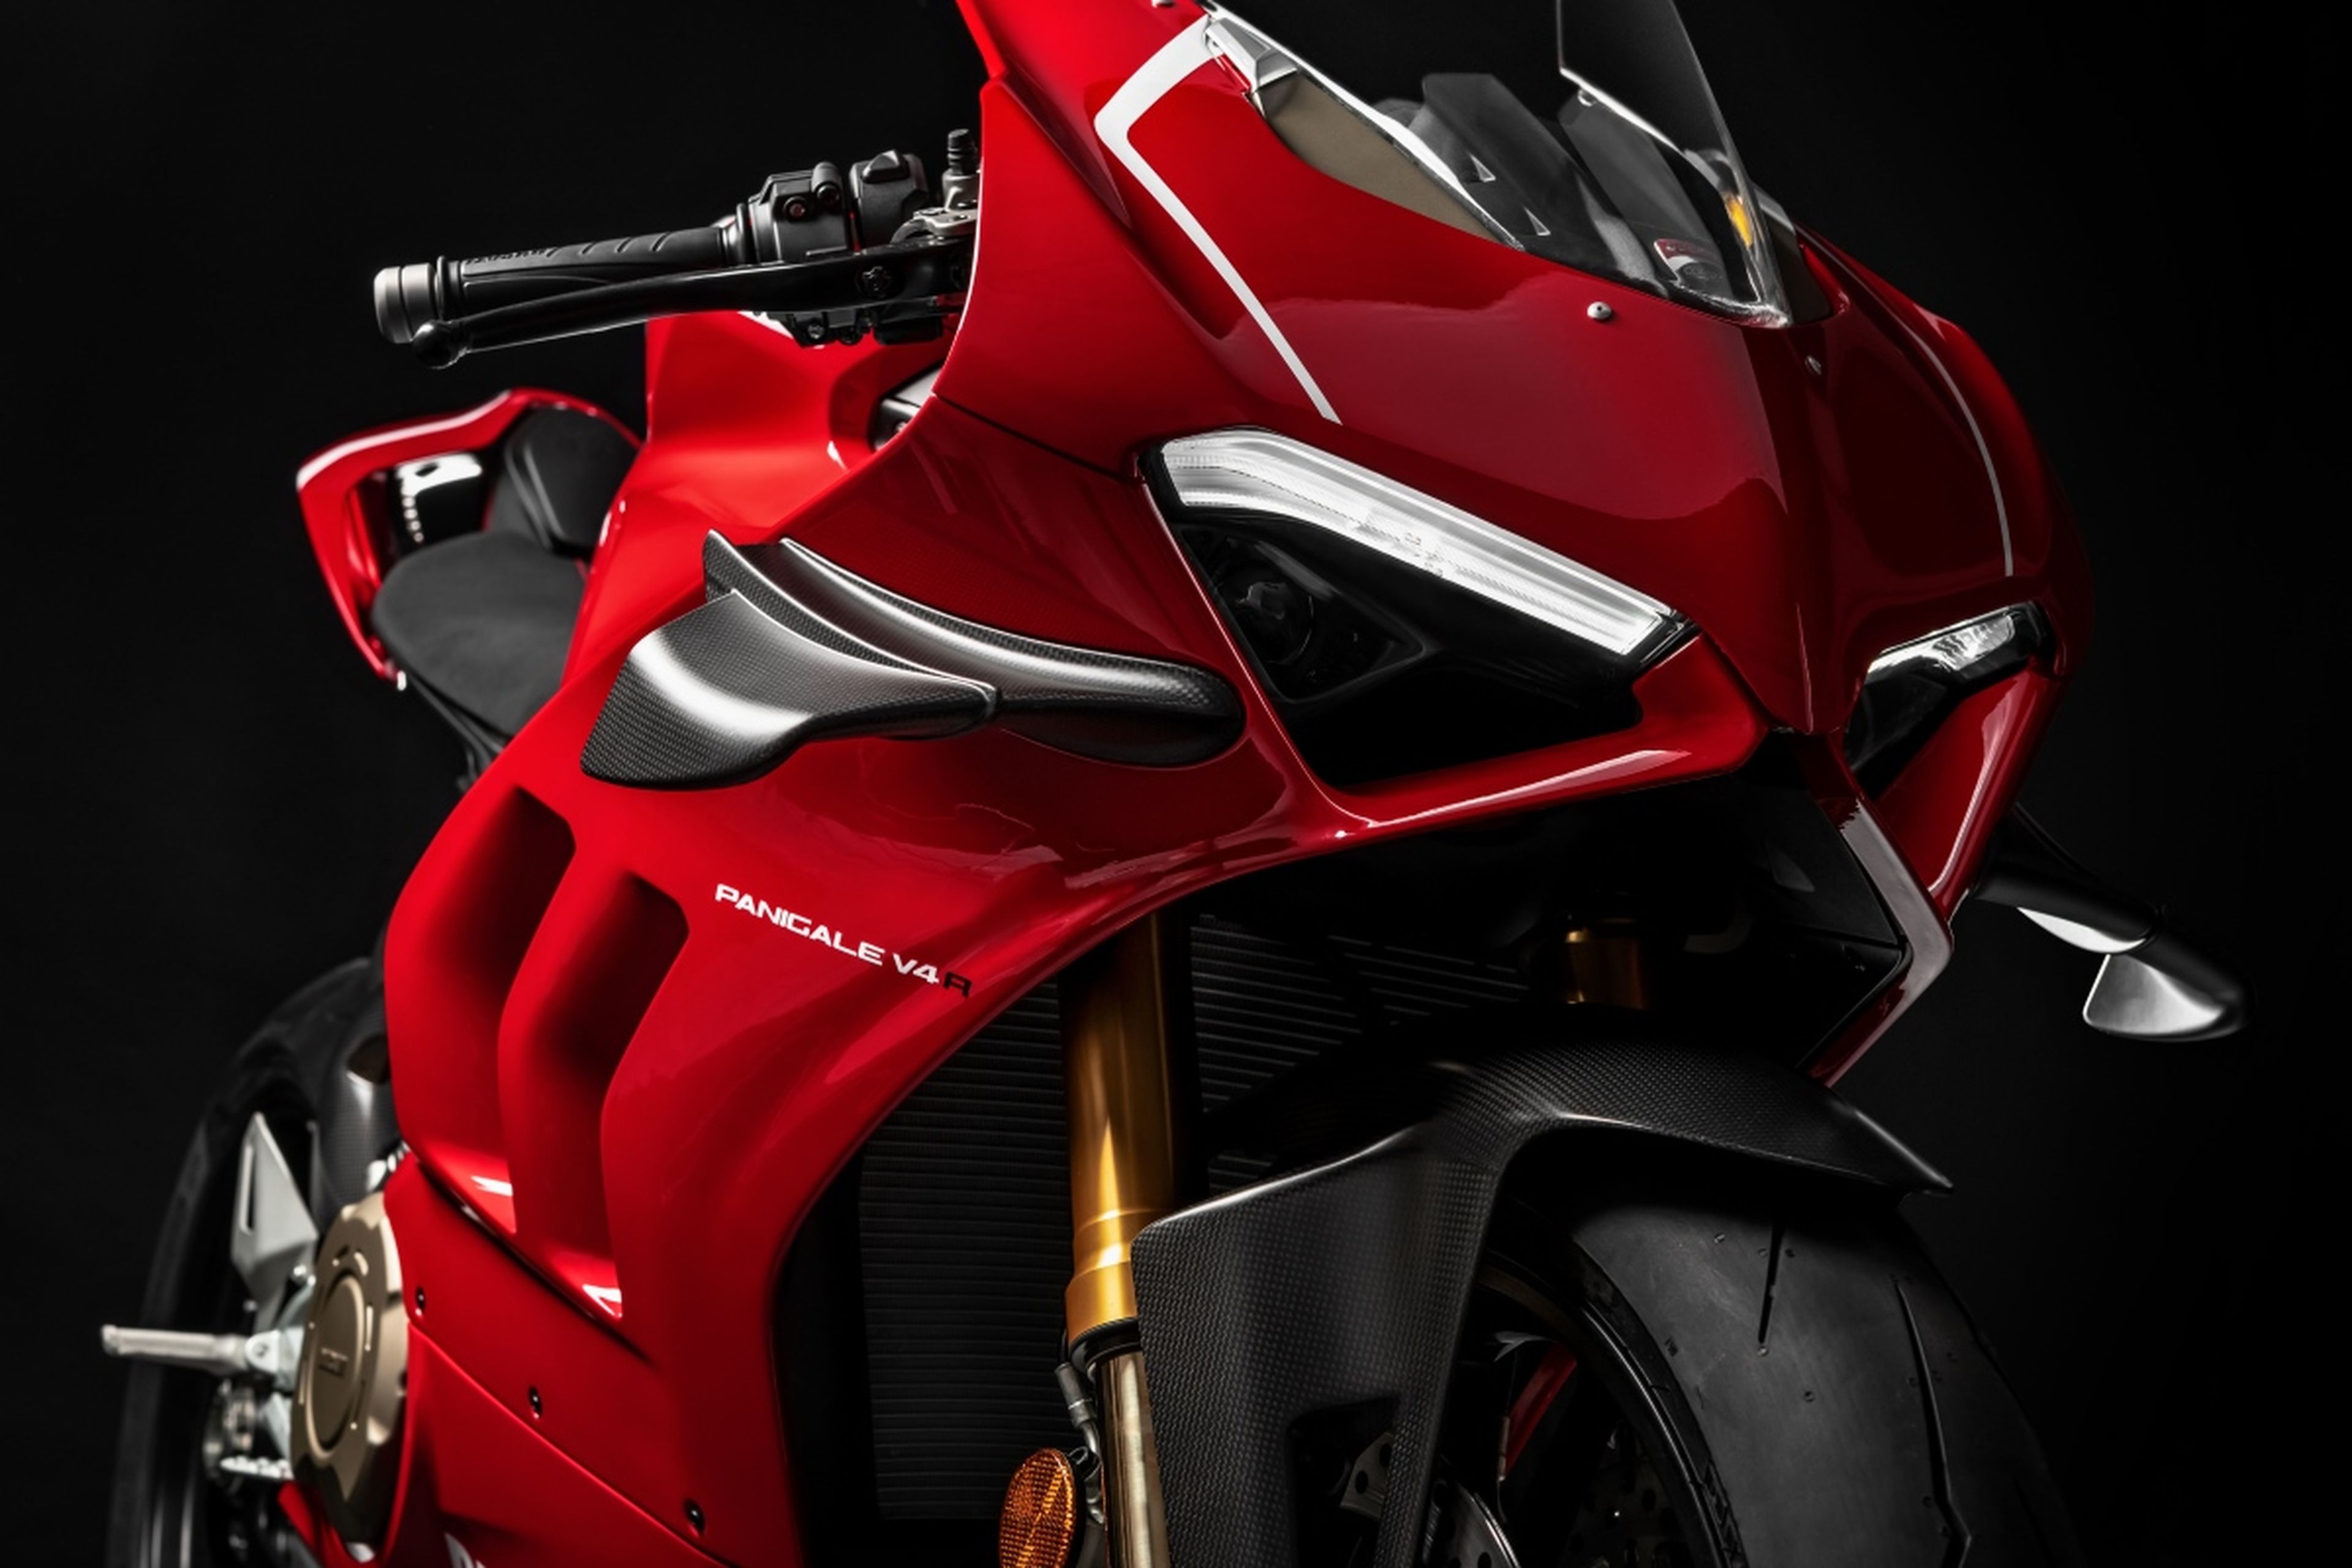 Nueva Ducati Panigale V4 R 2019